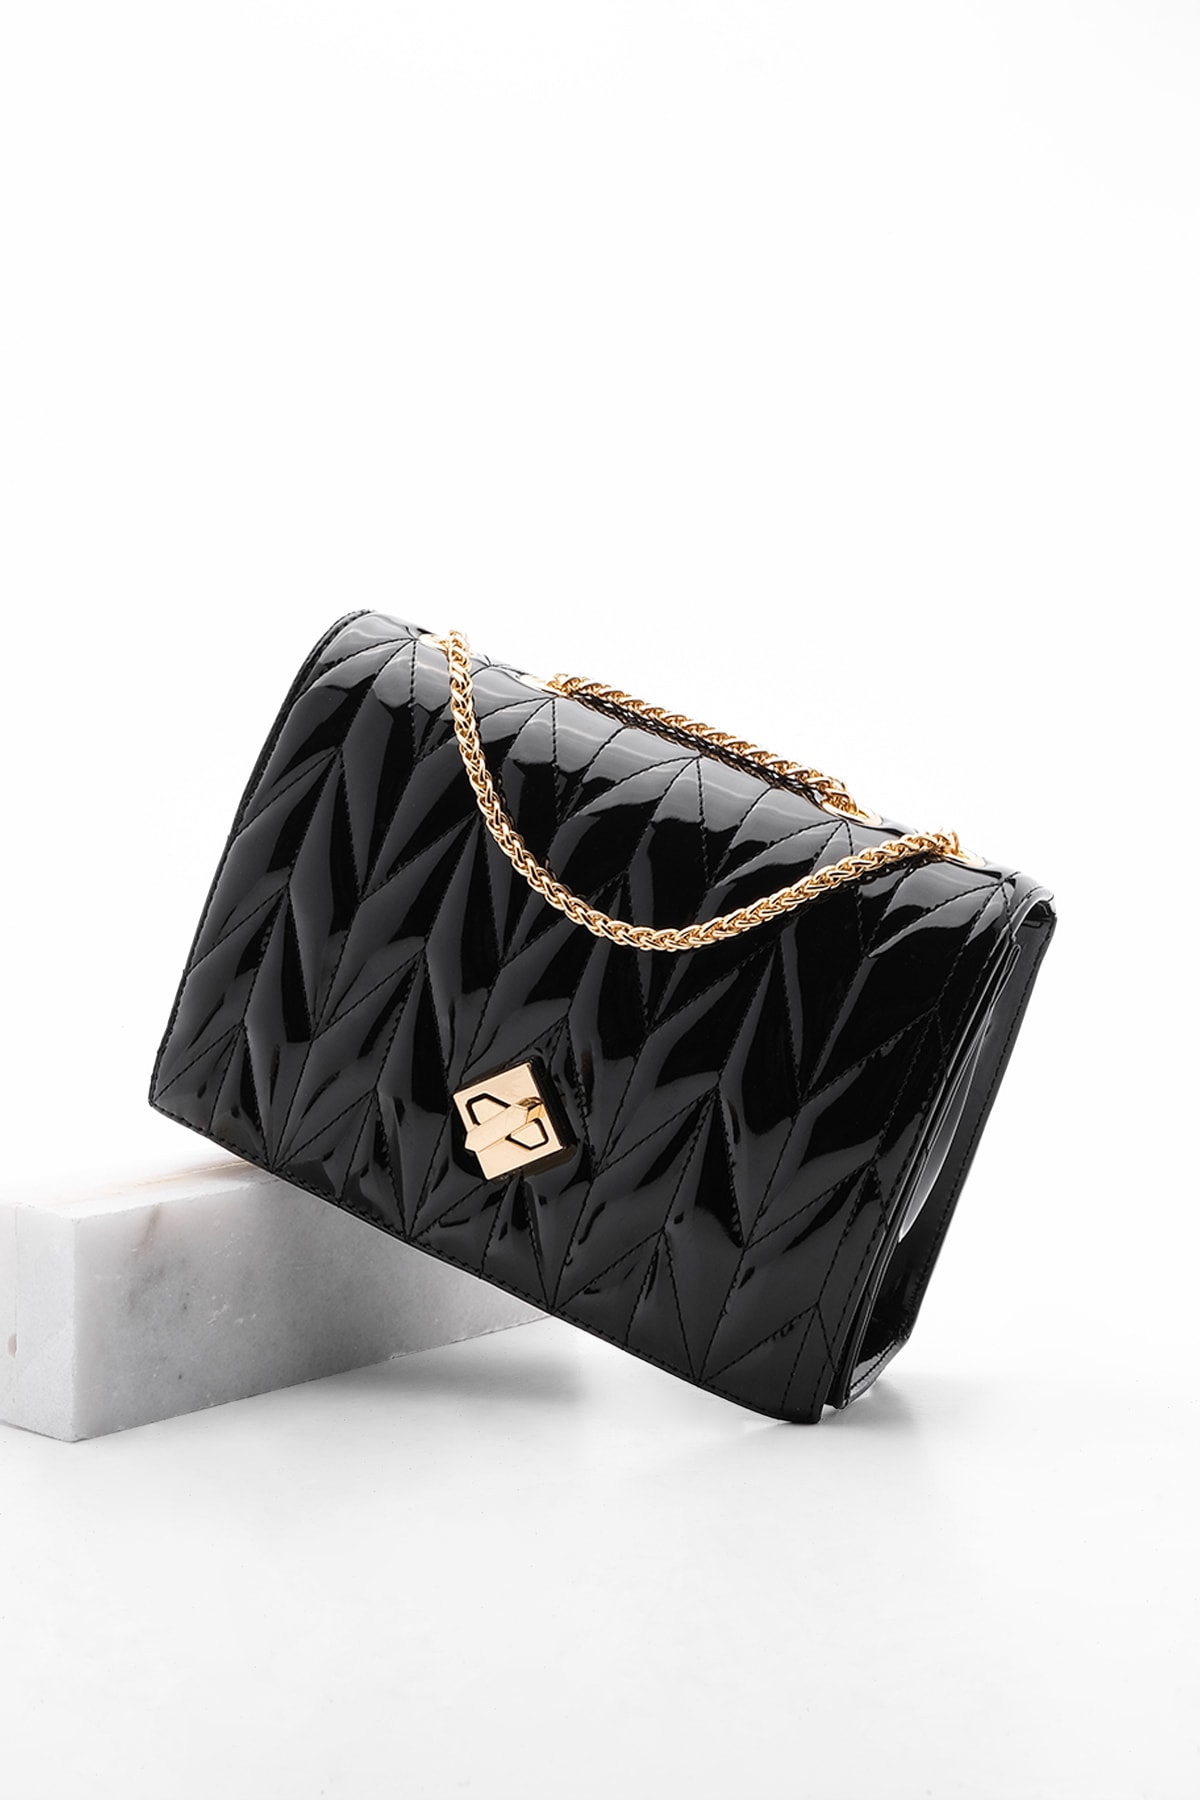 Marjin Women's Gold Color Chain Shoulder Bag Delbin Black Patent Leather